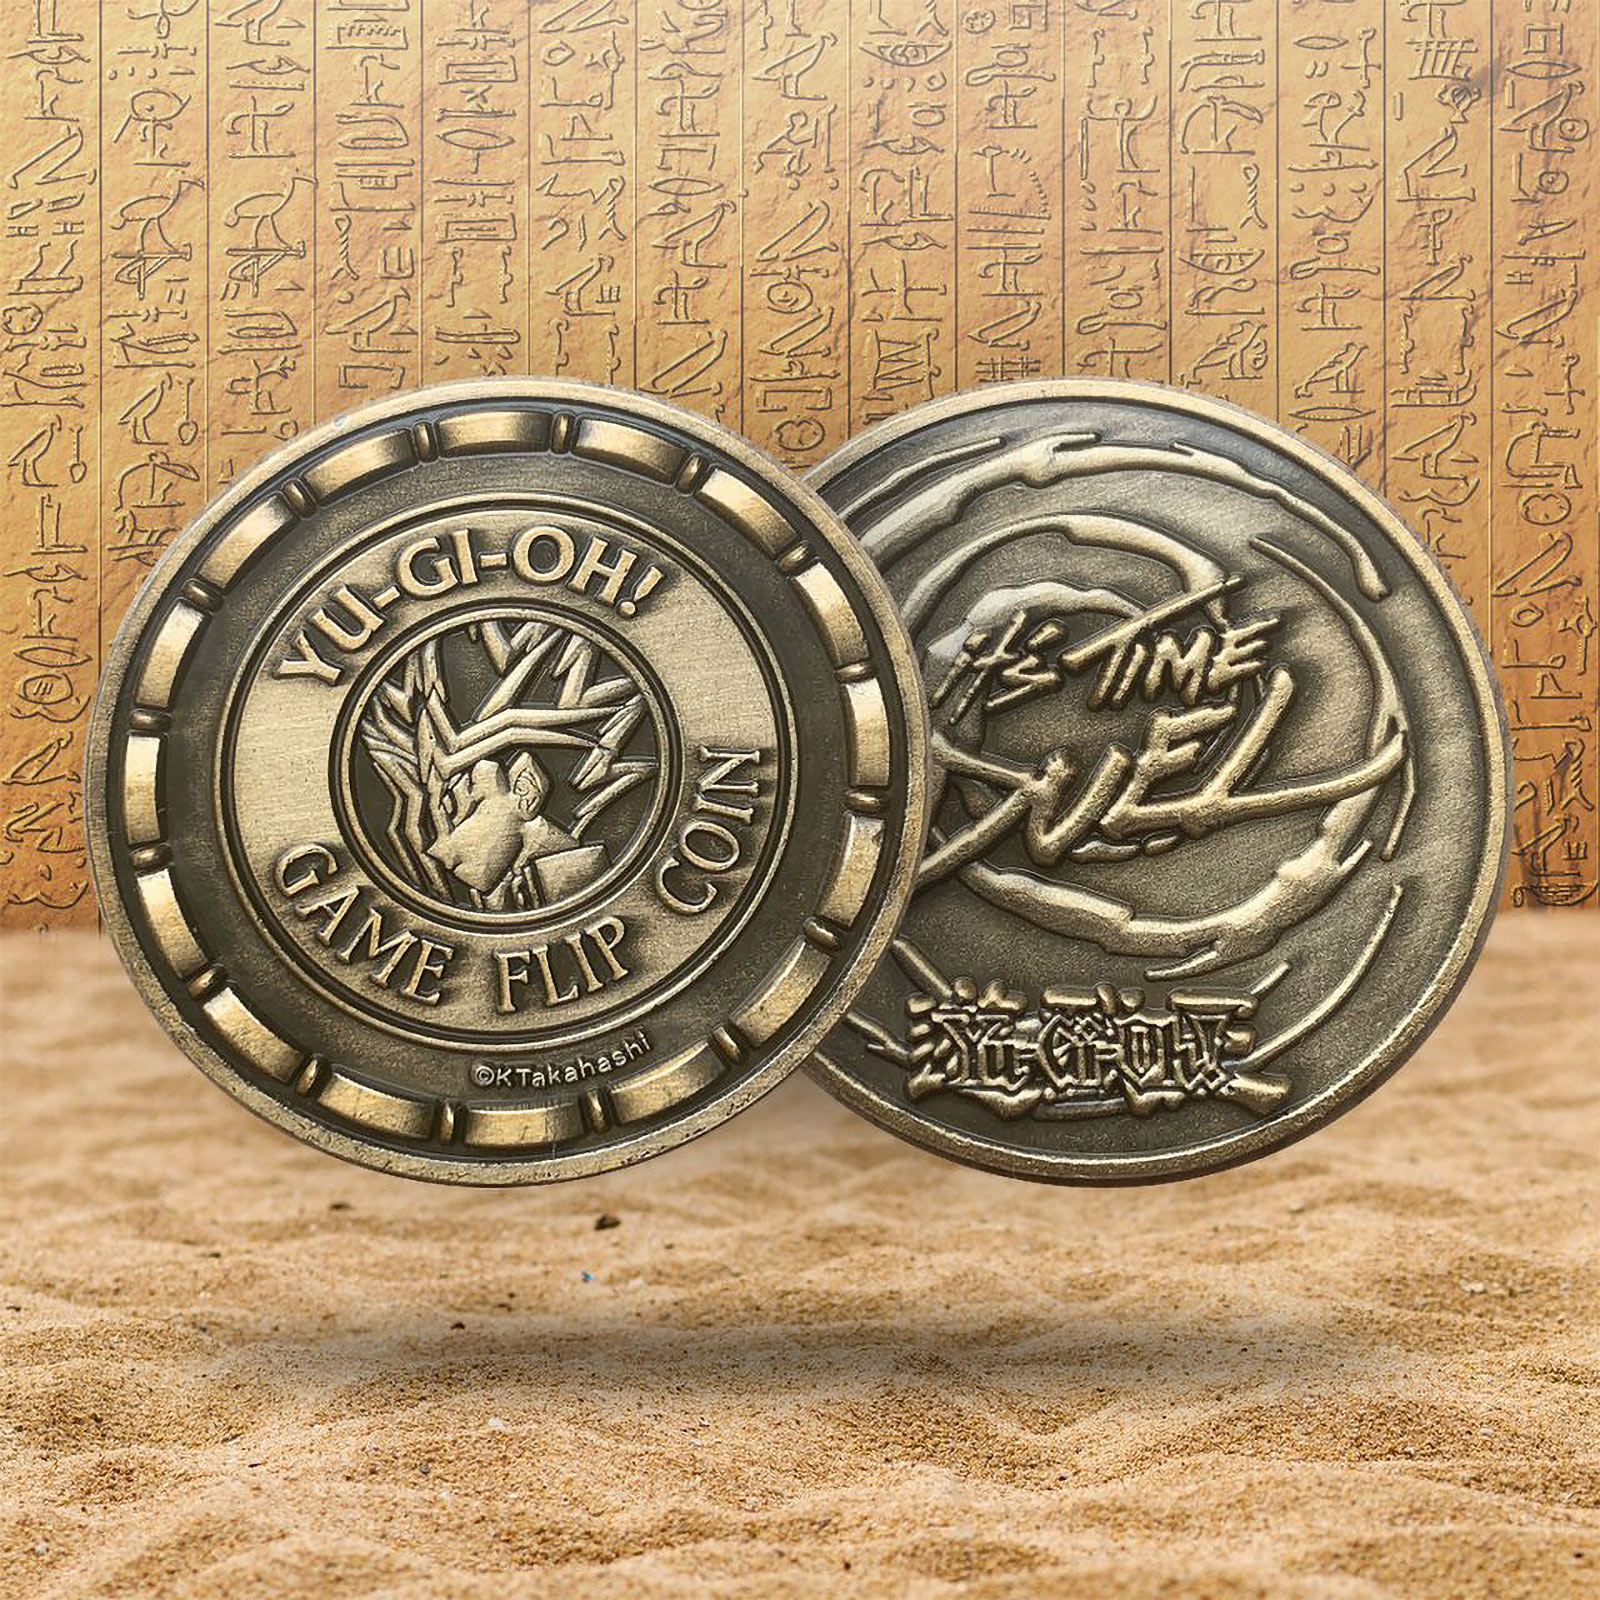 Yu-Gi-Oh! - Game Flip Coin Collector's Coin